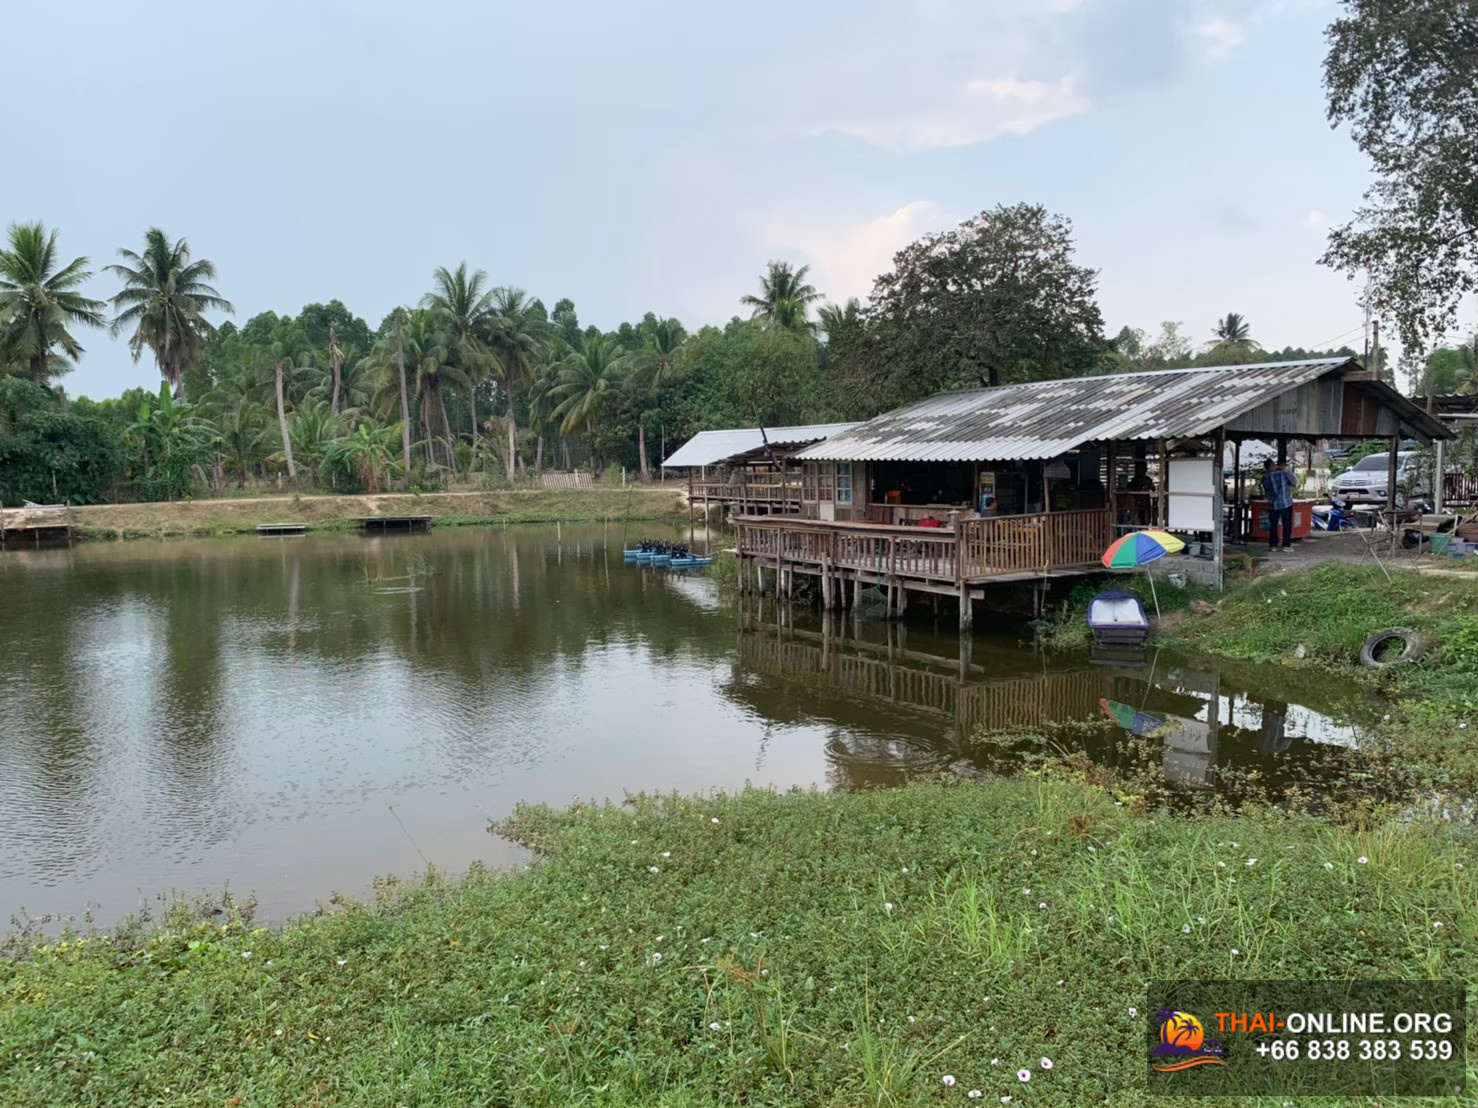 Барбекю на озере и рыбалка экскурсия компании Seven Countries из Паттайи Таиланд фото 19